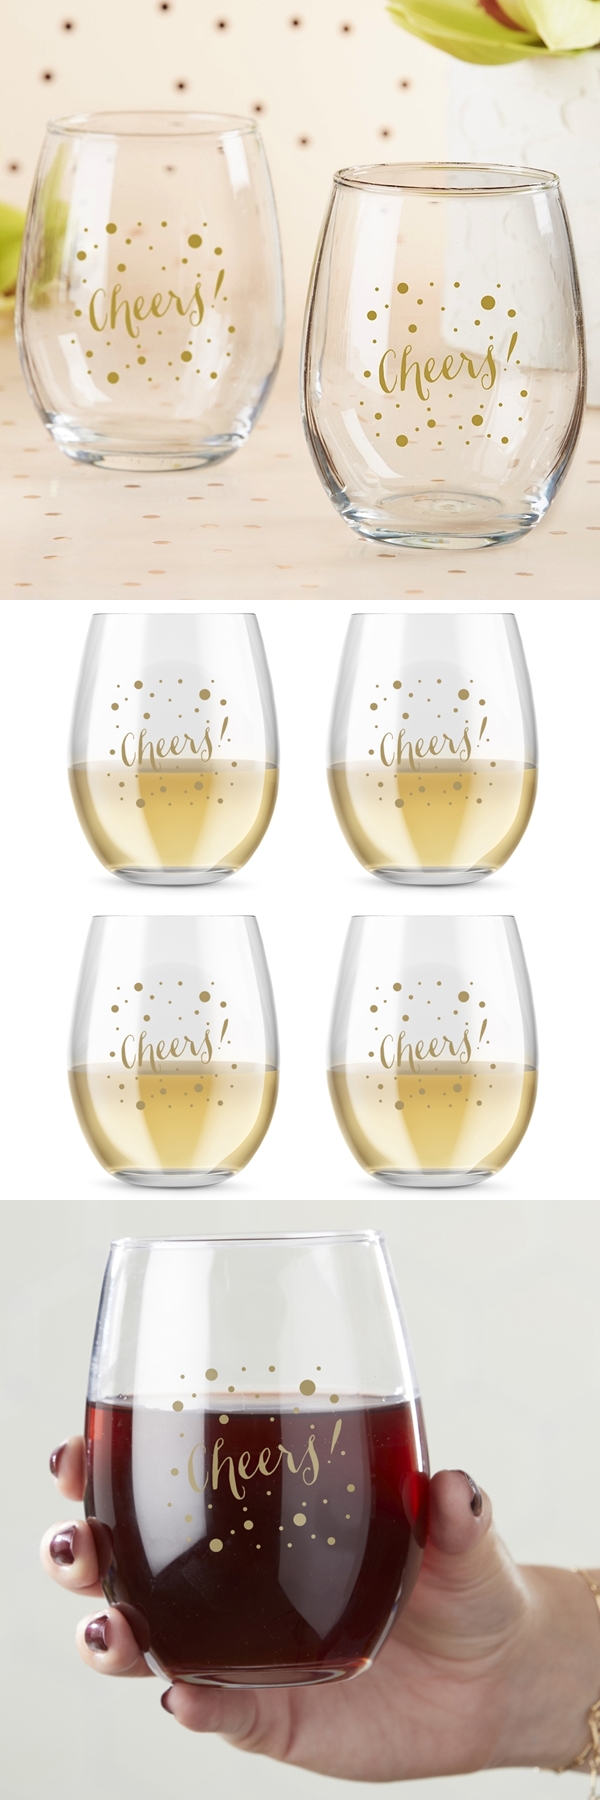 Kate Aspen 15oz Cheers! Dots Design Stemless Wine Glasses (Set of 4)